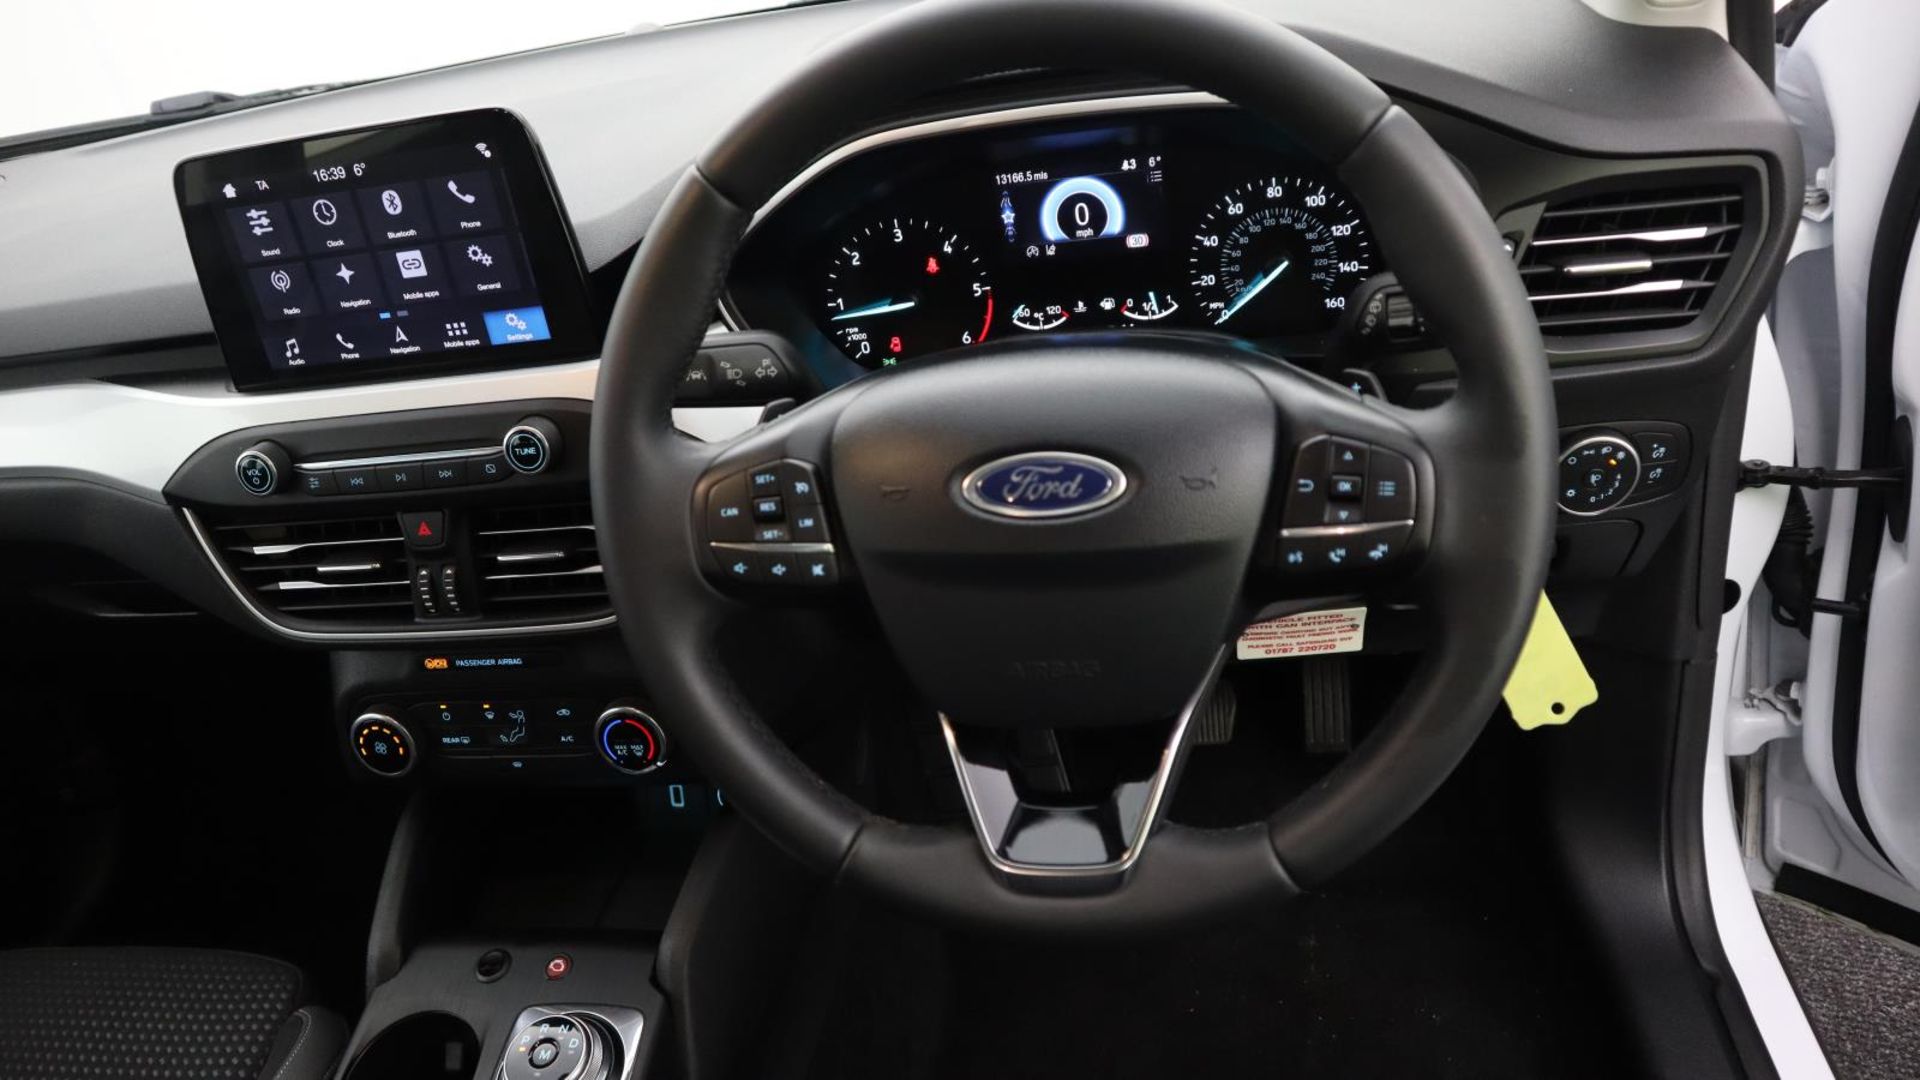 2019 Ford Focus Eco Blue Estate - LG69 YZF - 13167 miles - details in description - Image 13 of 43